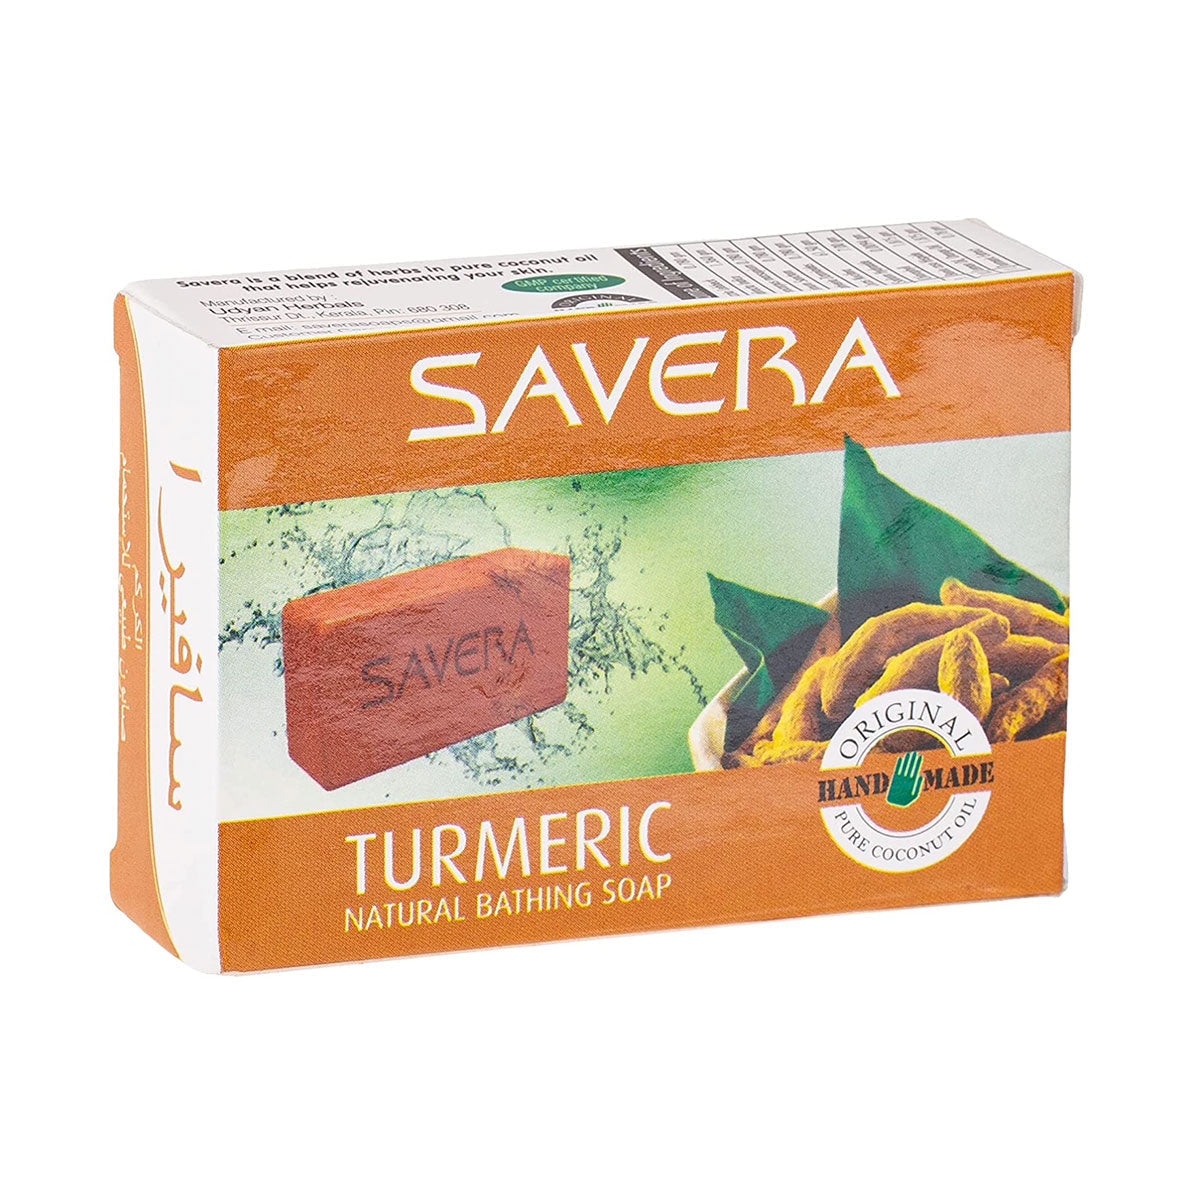 Savera Herbal Turmeric Soap 75g  100 All Natural Herbal Ingredients Value Pack of 12 